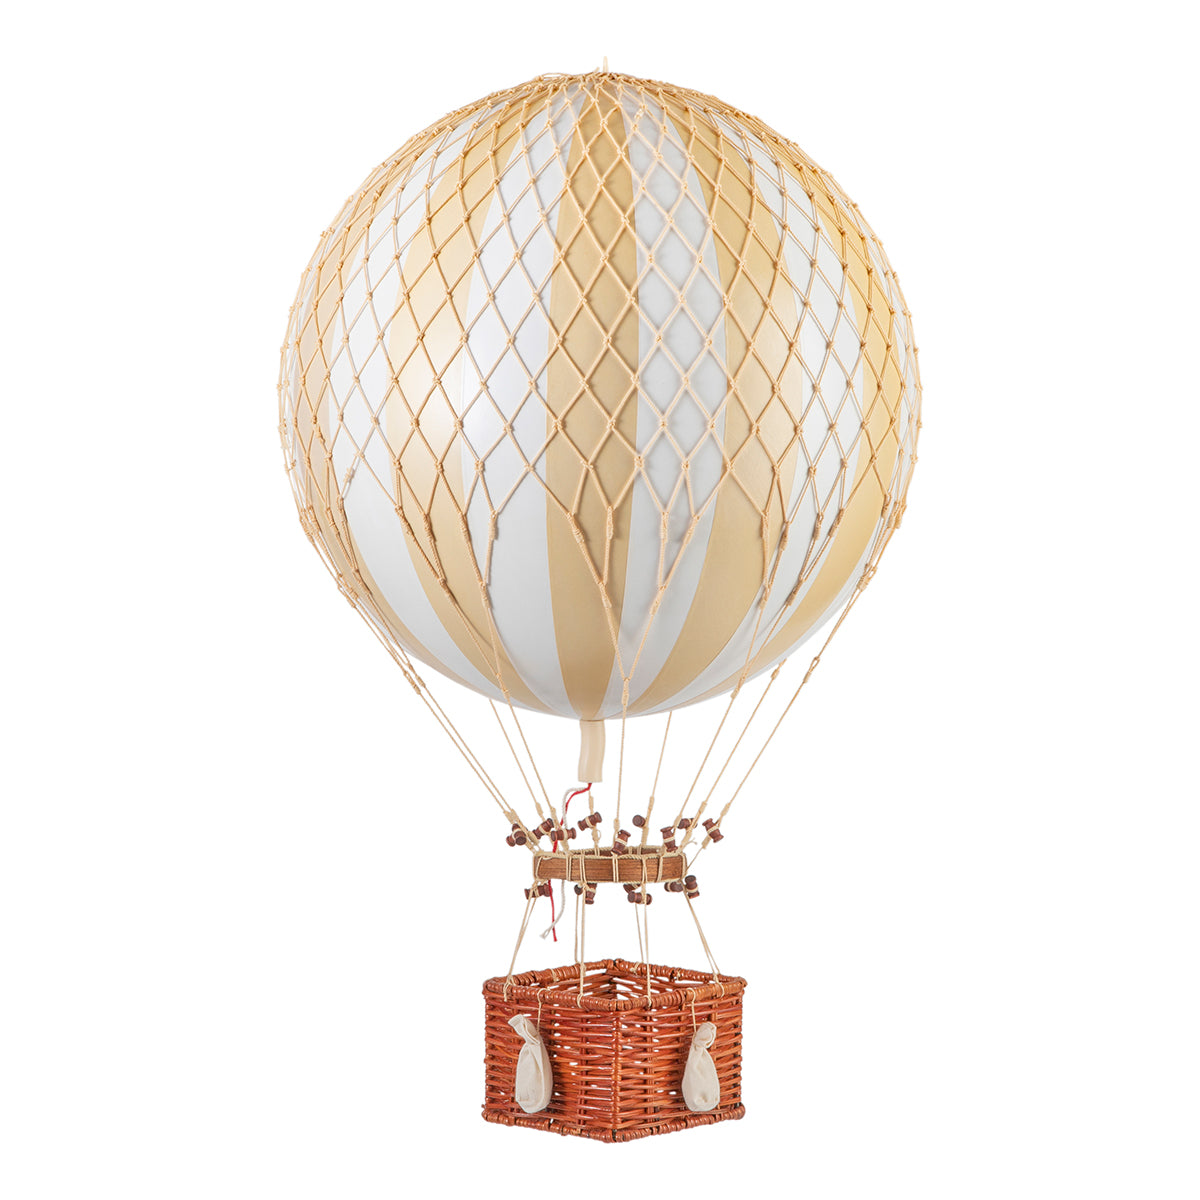 A Wonderen Stroopwafels-inspired Wonderen Large Hot Air Balloon - Jules Verne model for decoration, complete with a basket.